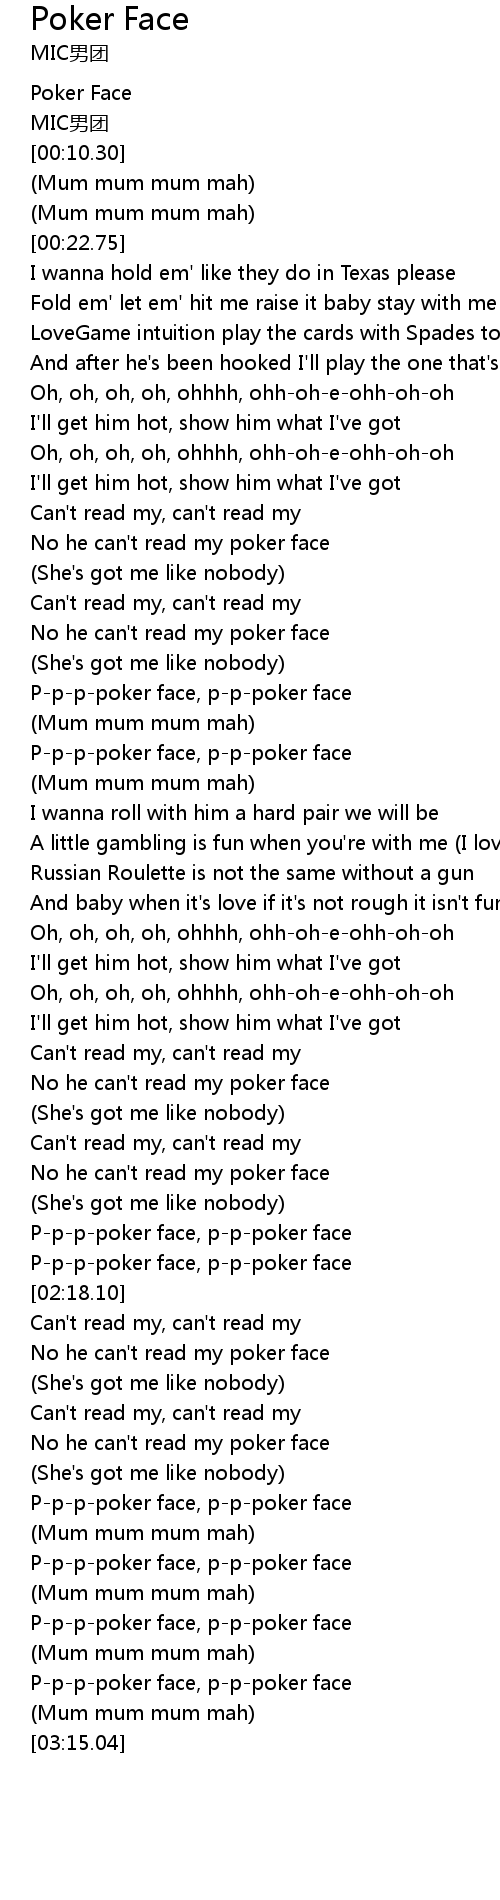 poker face lyrics , total casino